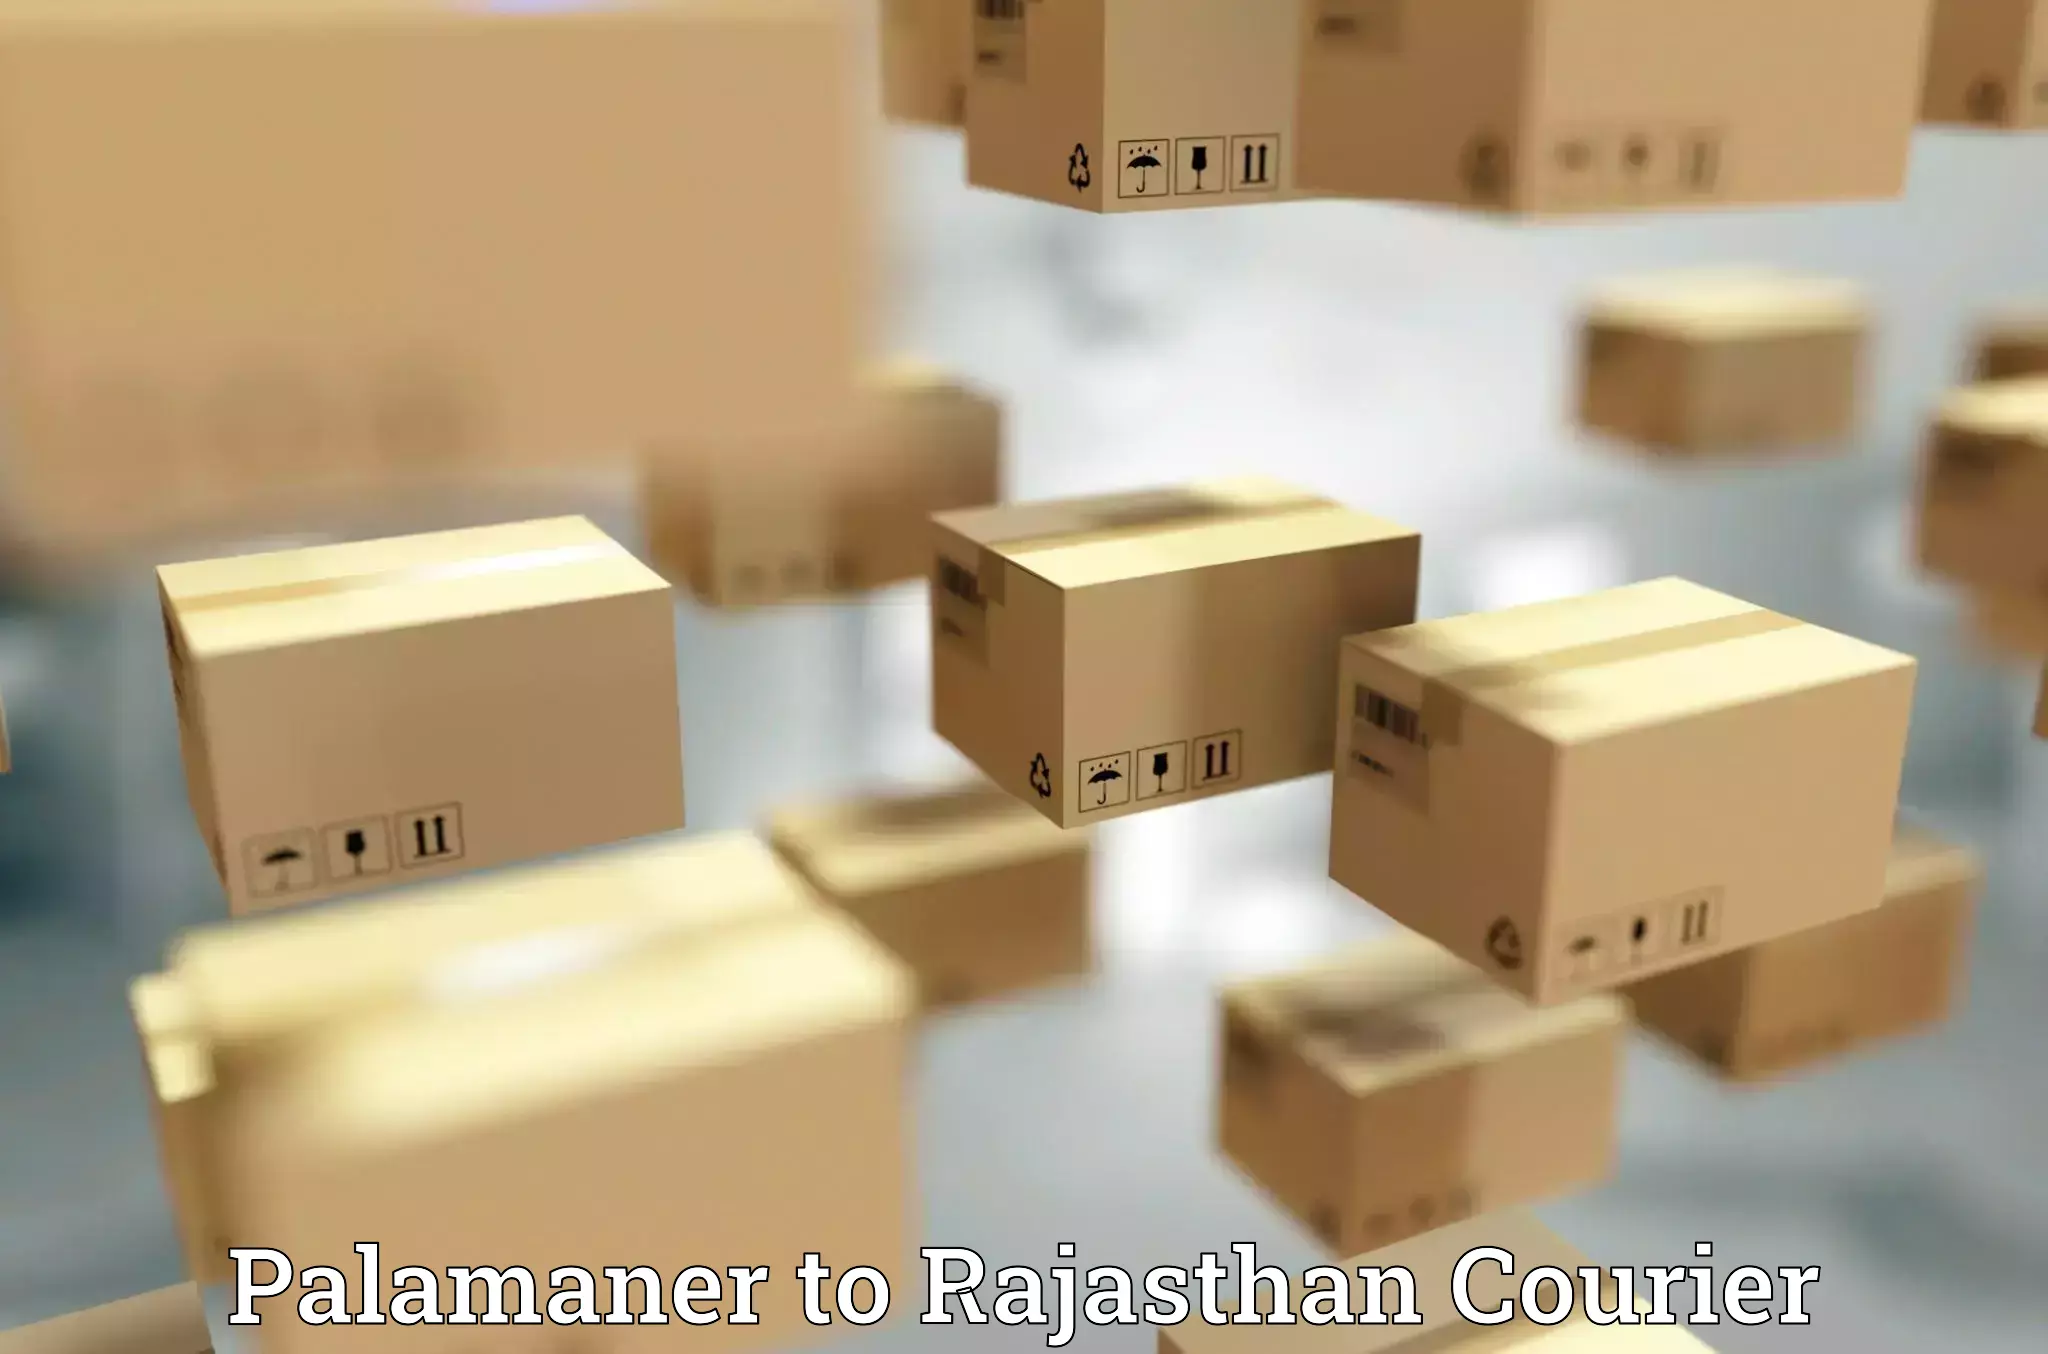 Shipping and handling Palamaner to Piparcity